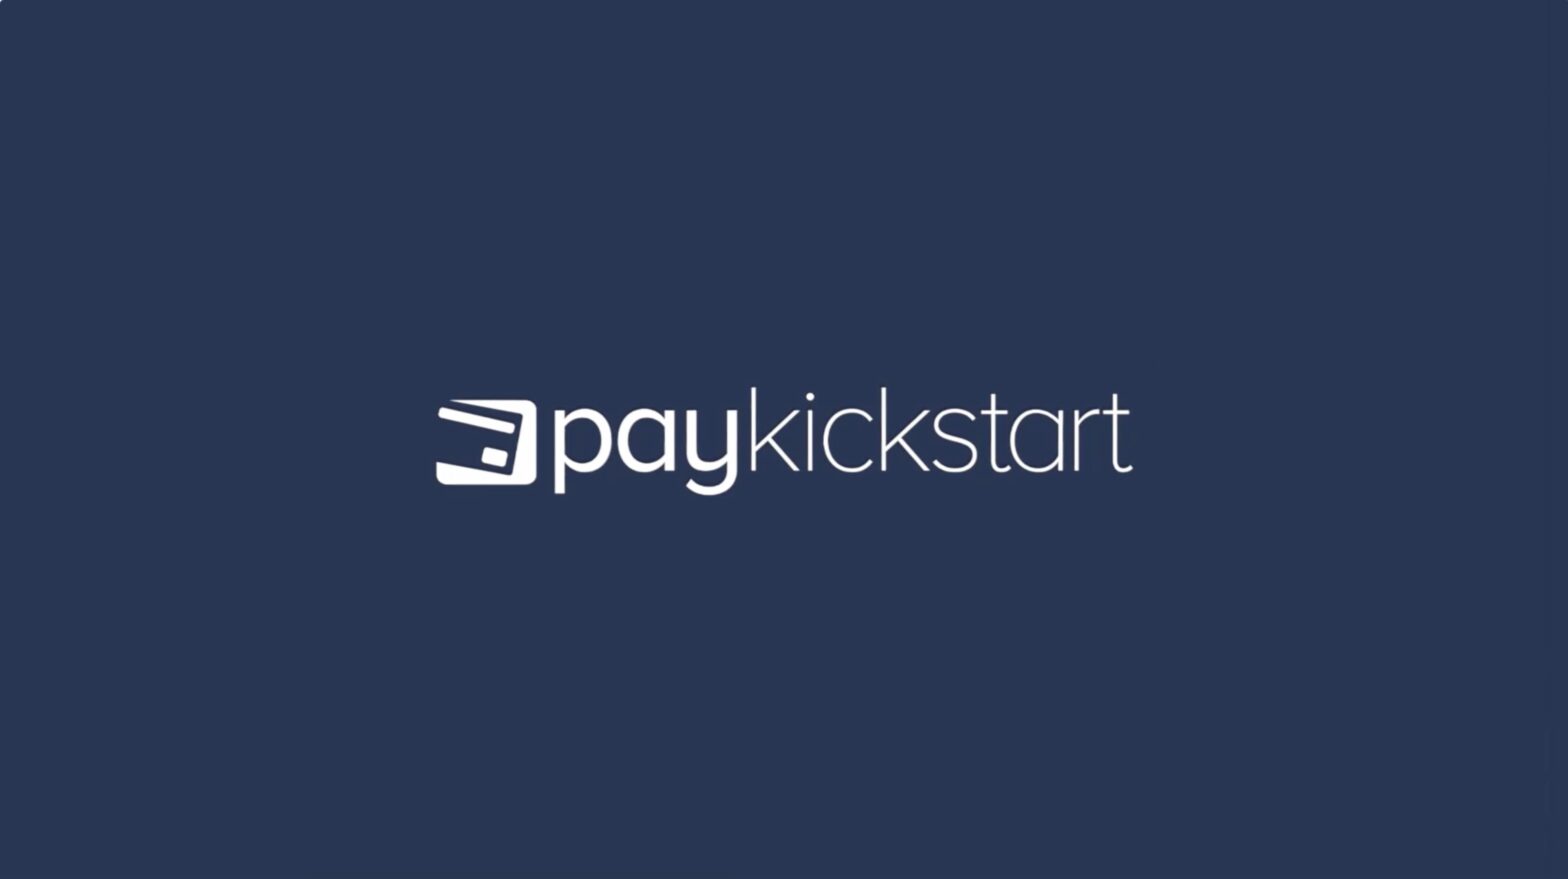 Easy way to make money with paykickstart affiliate program